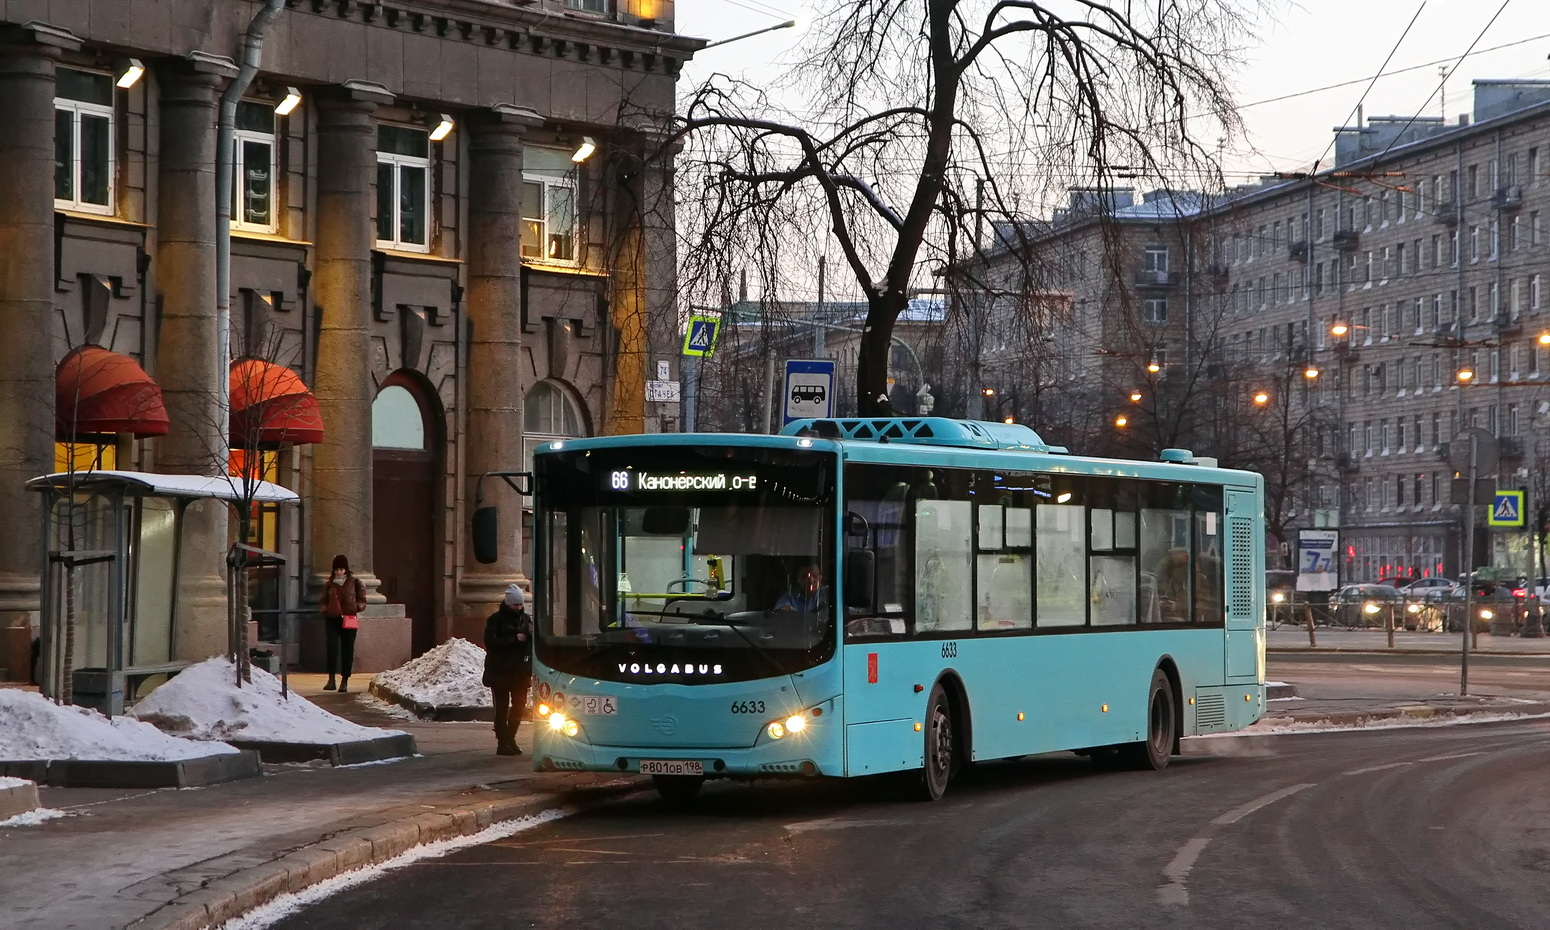 Saint Petersburg, Volgabus-5270.G2 (LNG) # 6633